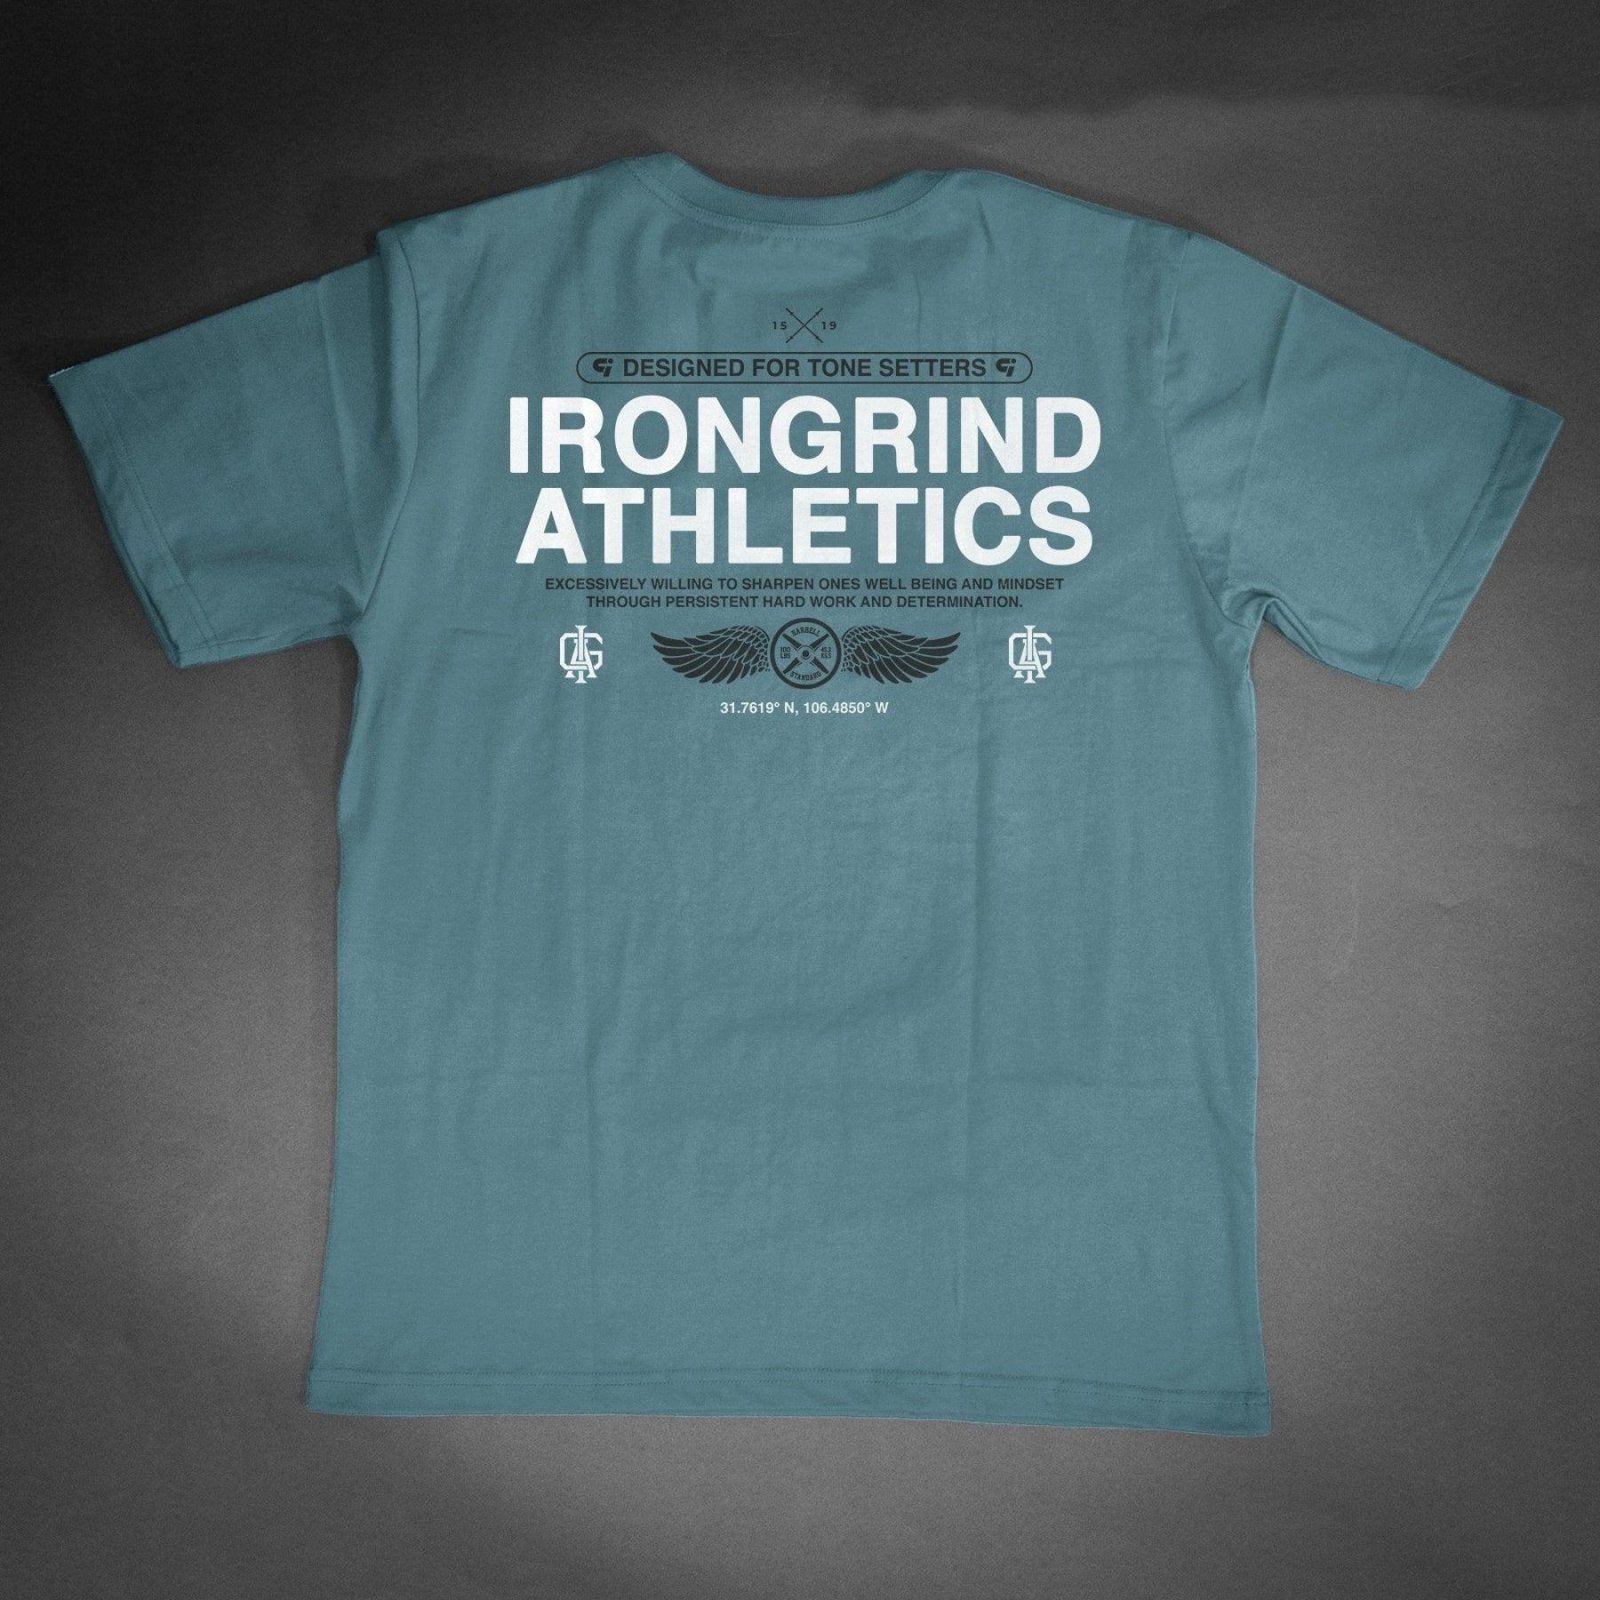 Triumph 'Designed For' T-Shirt - IronGrind Athletics - activewear - gymshark - alphalete